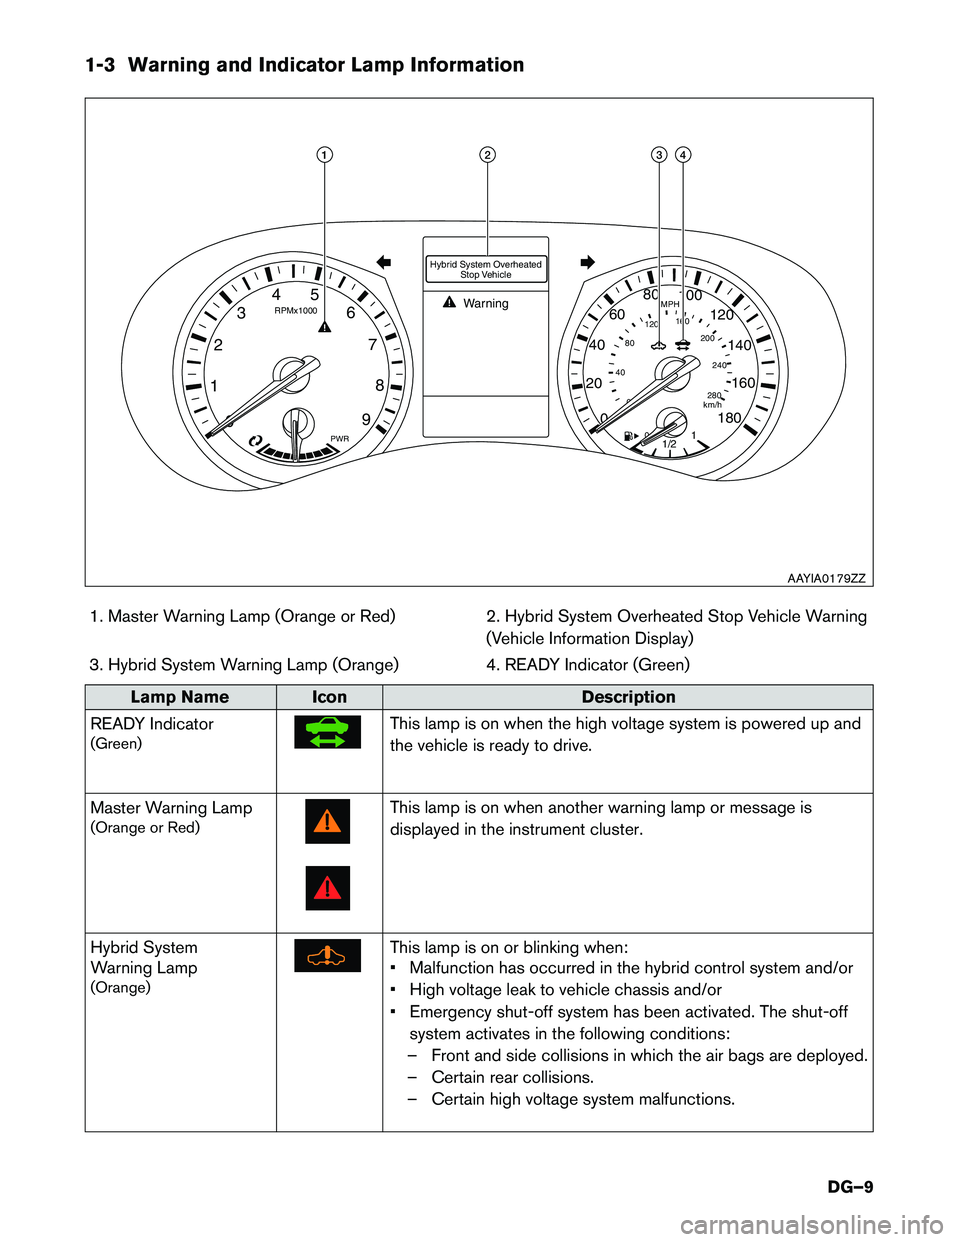 INFINITI Q50 HYBRID 2015  Dismantling Guide 1-3 Warning and Indicator Lamp Information1. Master Warning Lamp (Orange or Red) 2. Hybrid System Overheated Stop Vehicle Warning (Vehicle Information Display)
3. Hybrid System Warning Lamp (Orange) 4